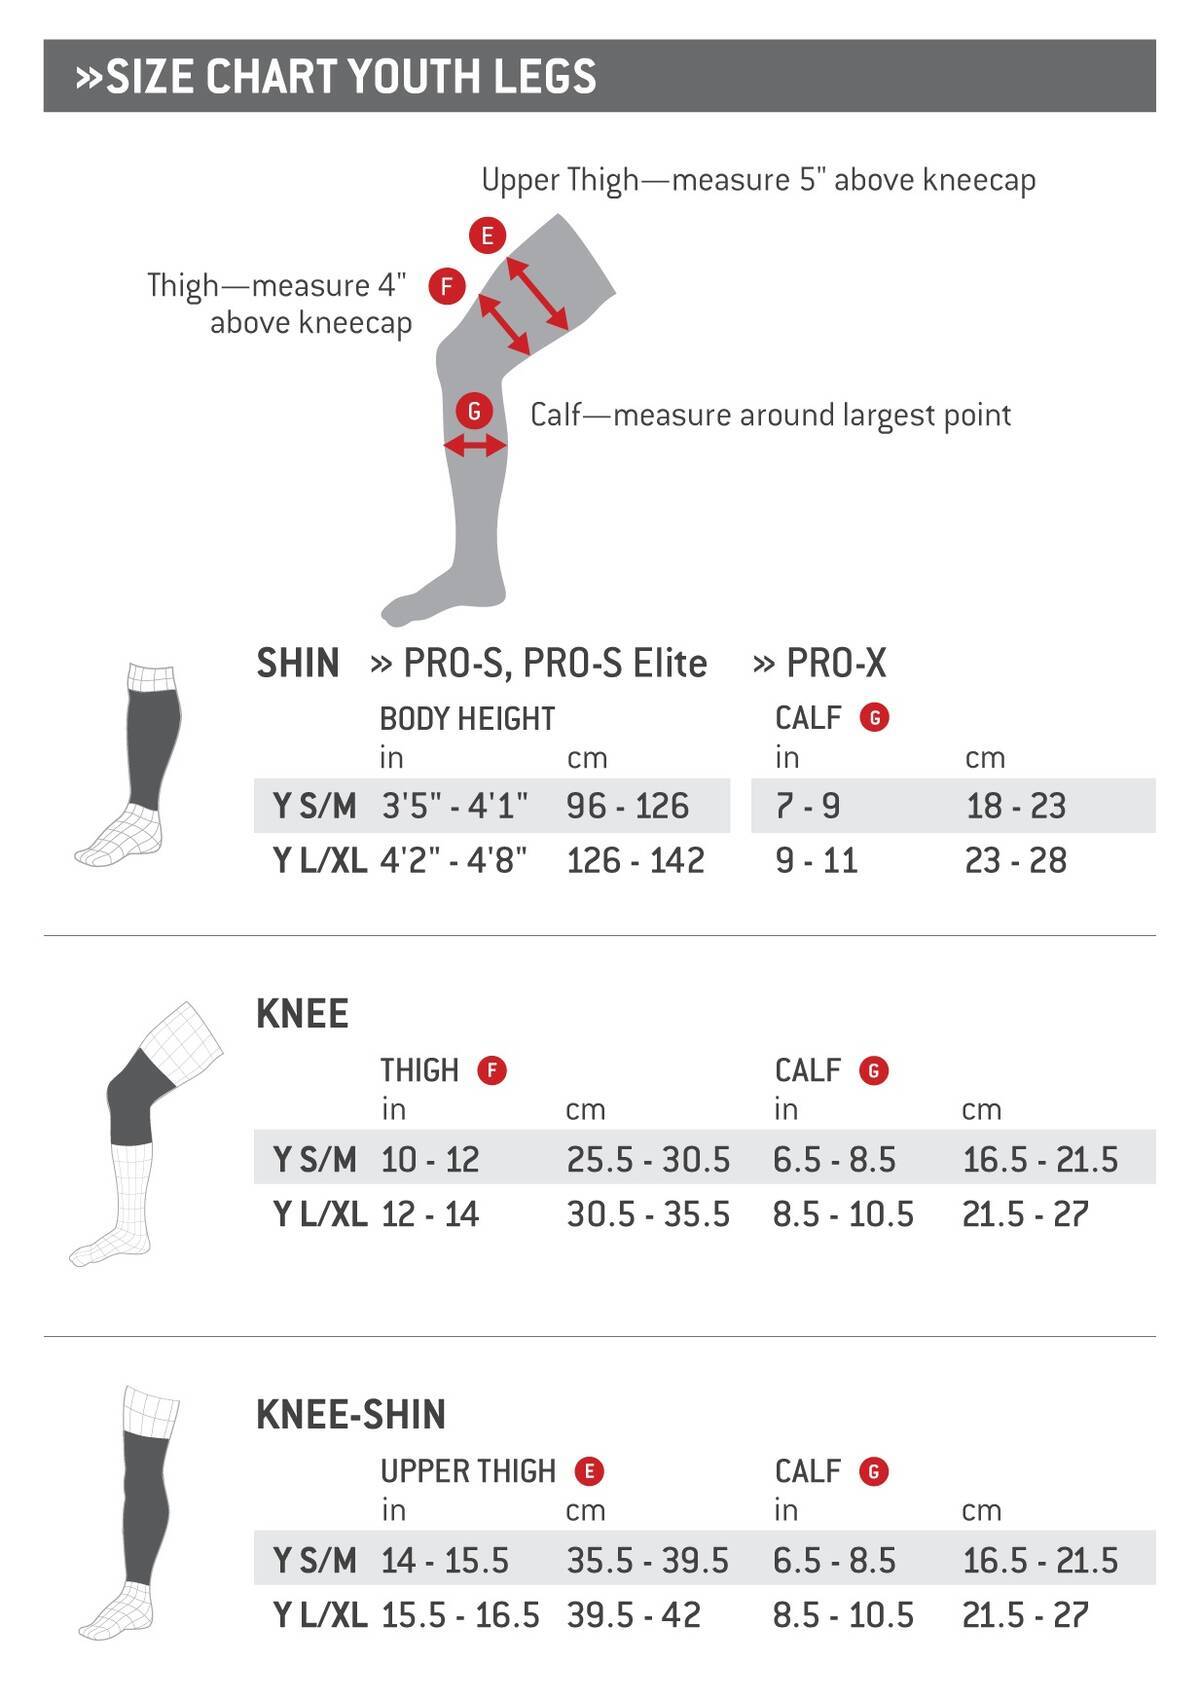 G-FORM Pro-X Knee-Shin Guards Color Black Size XL